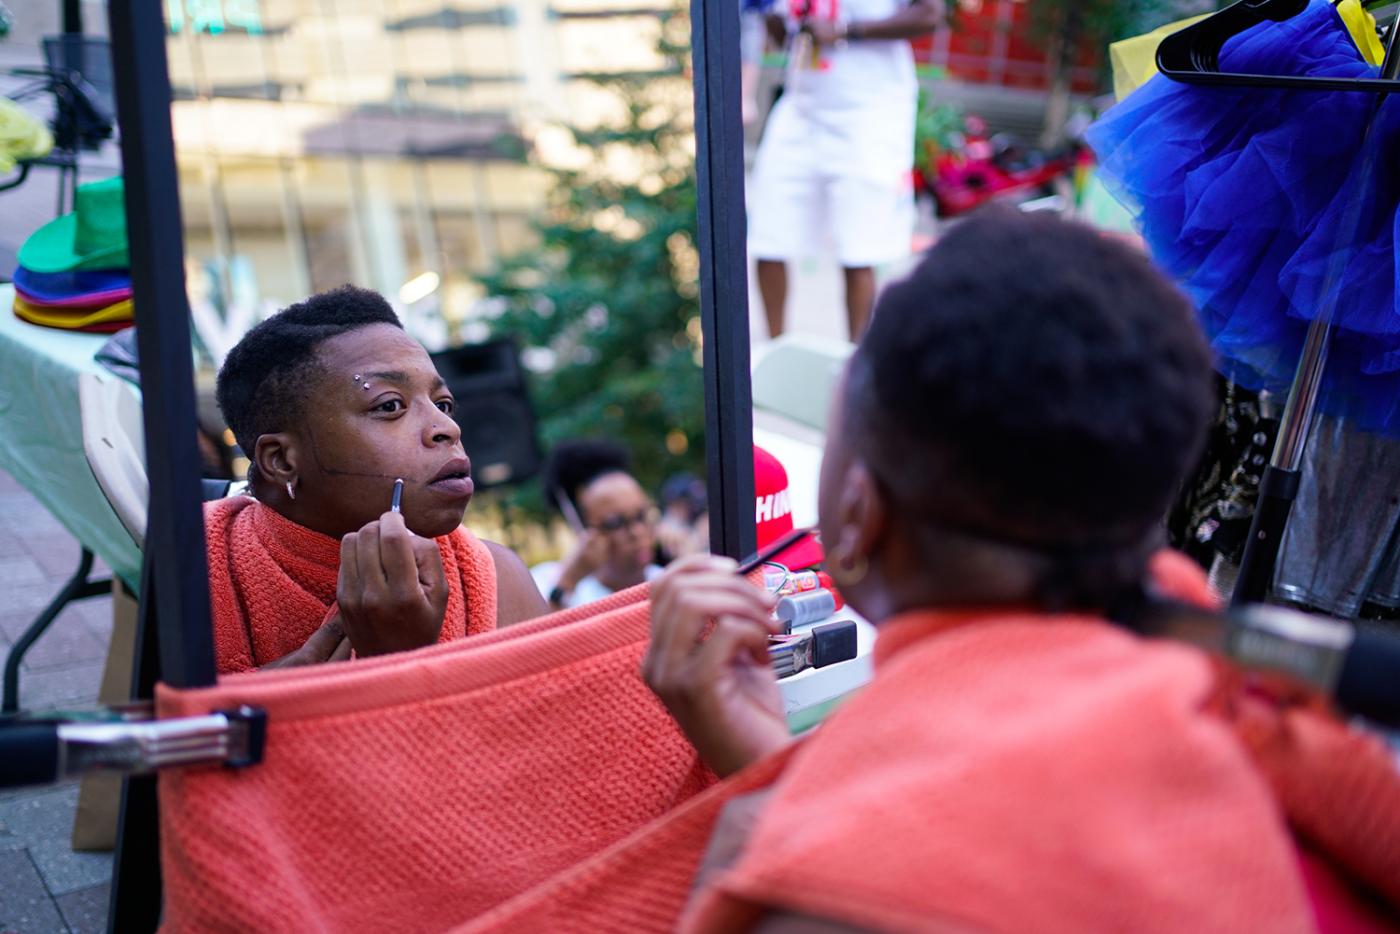 A Black person applies makeup in a mirror.